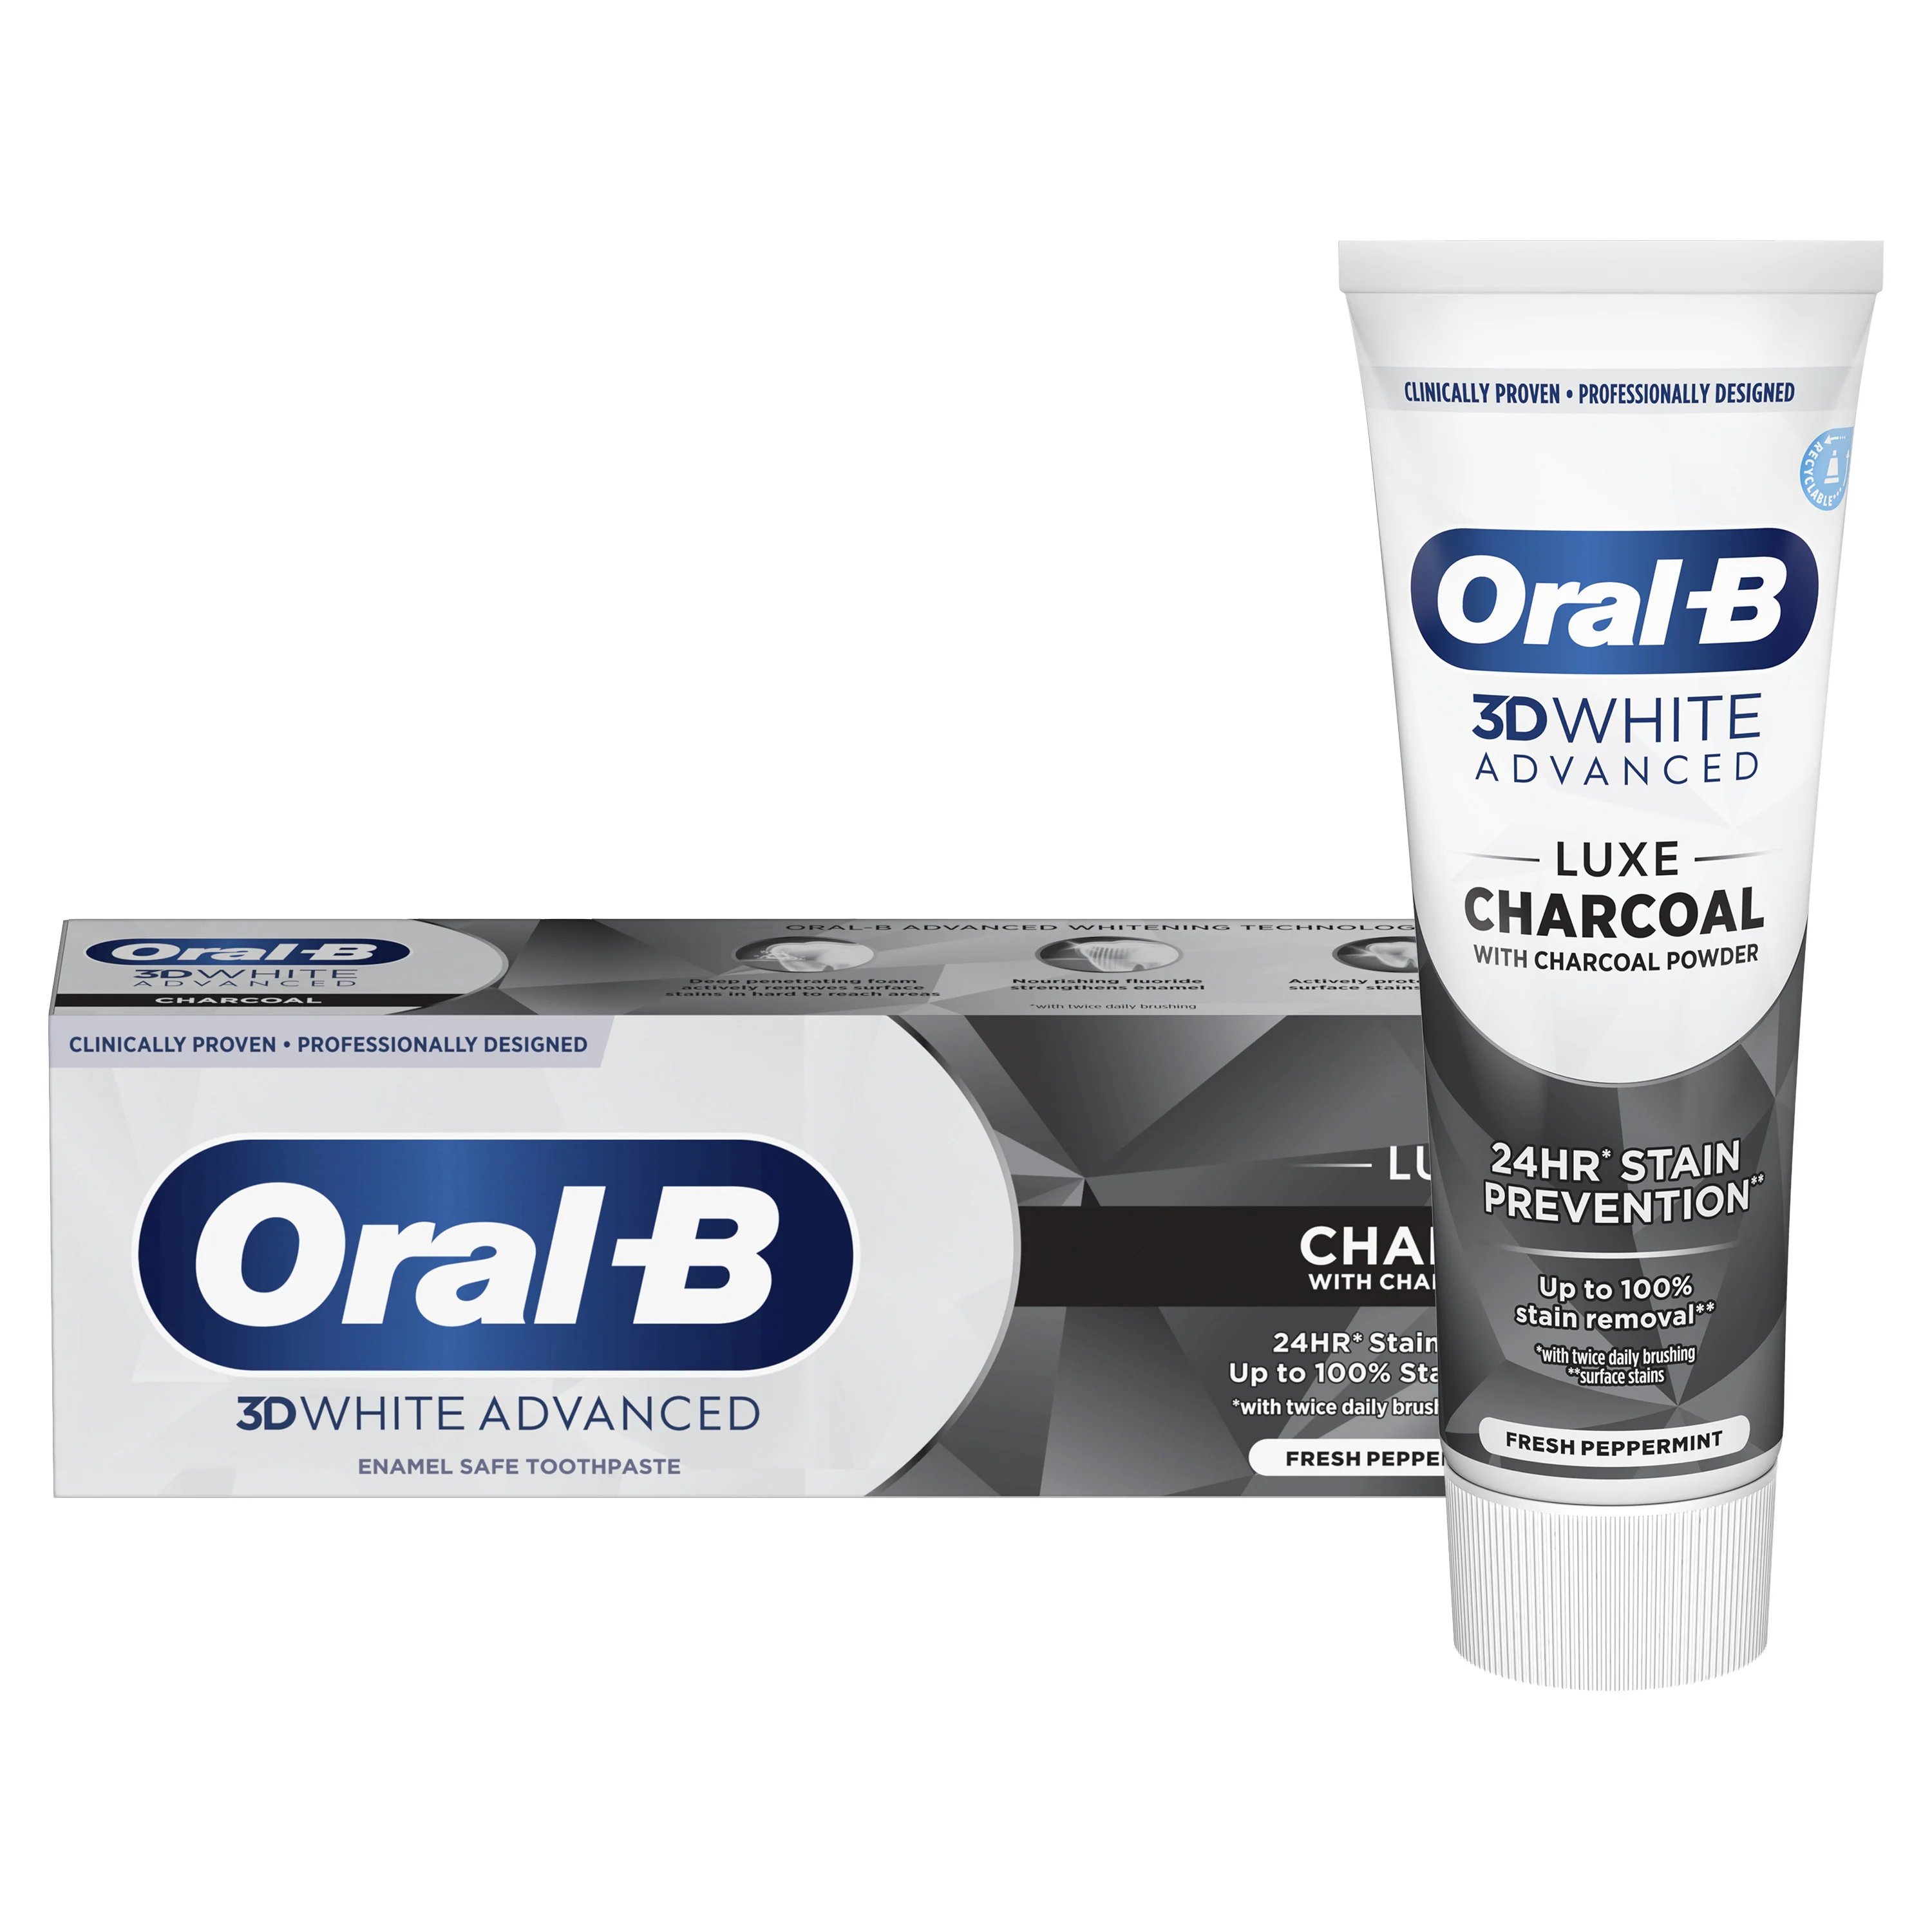 Oral-B 3DWhite Advanced Luxe Charcoal tandkräm - Main 